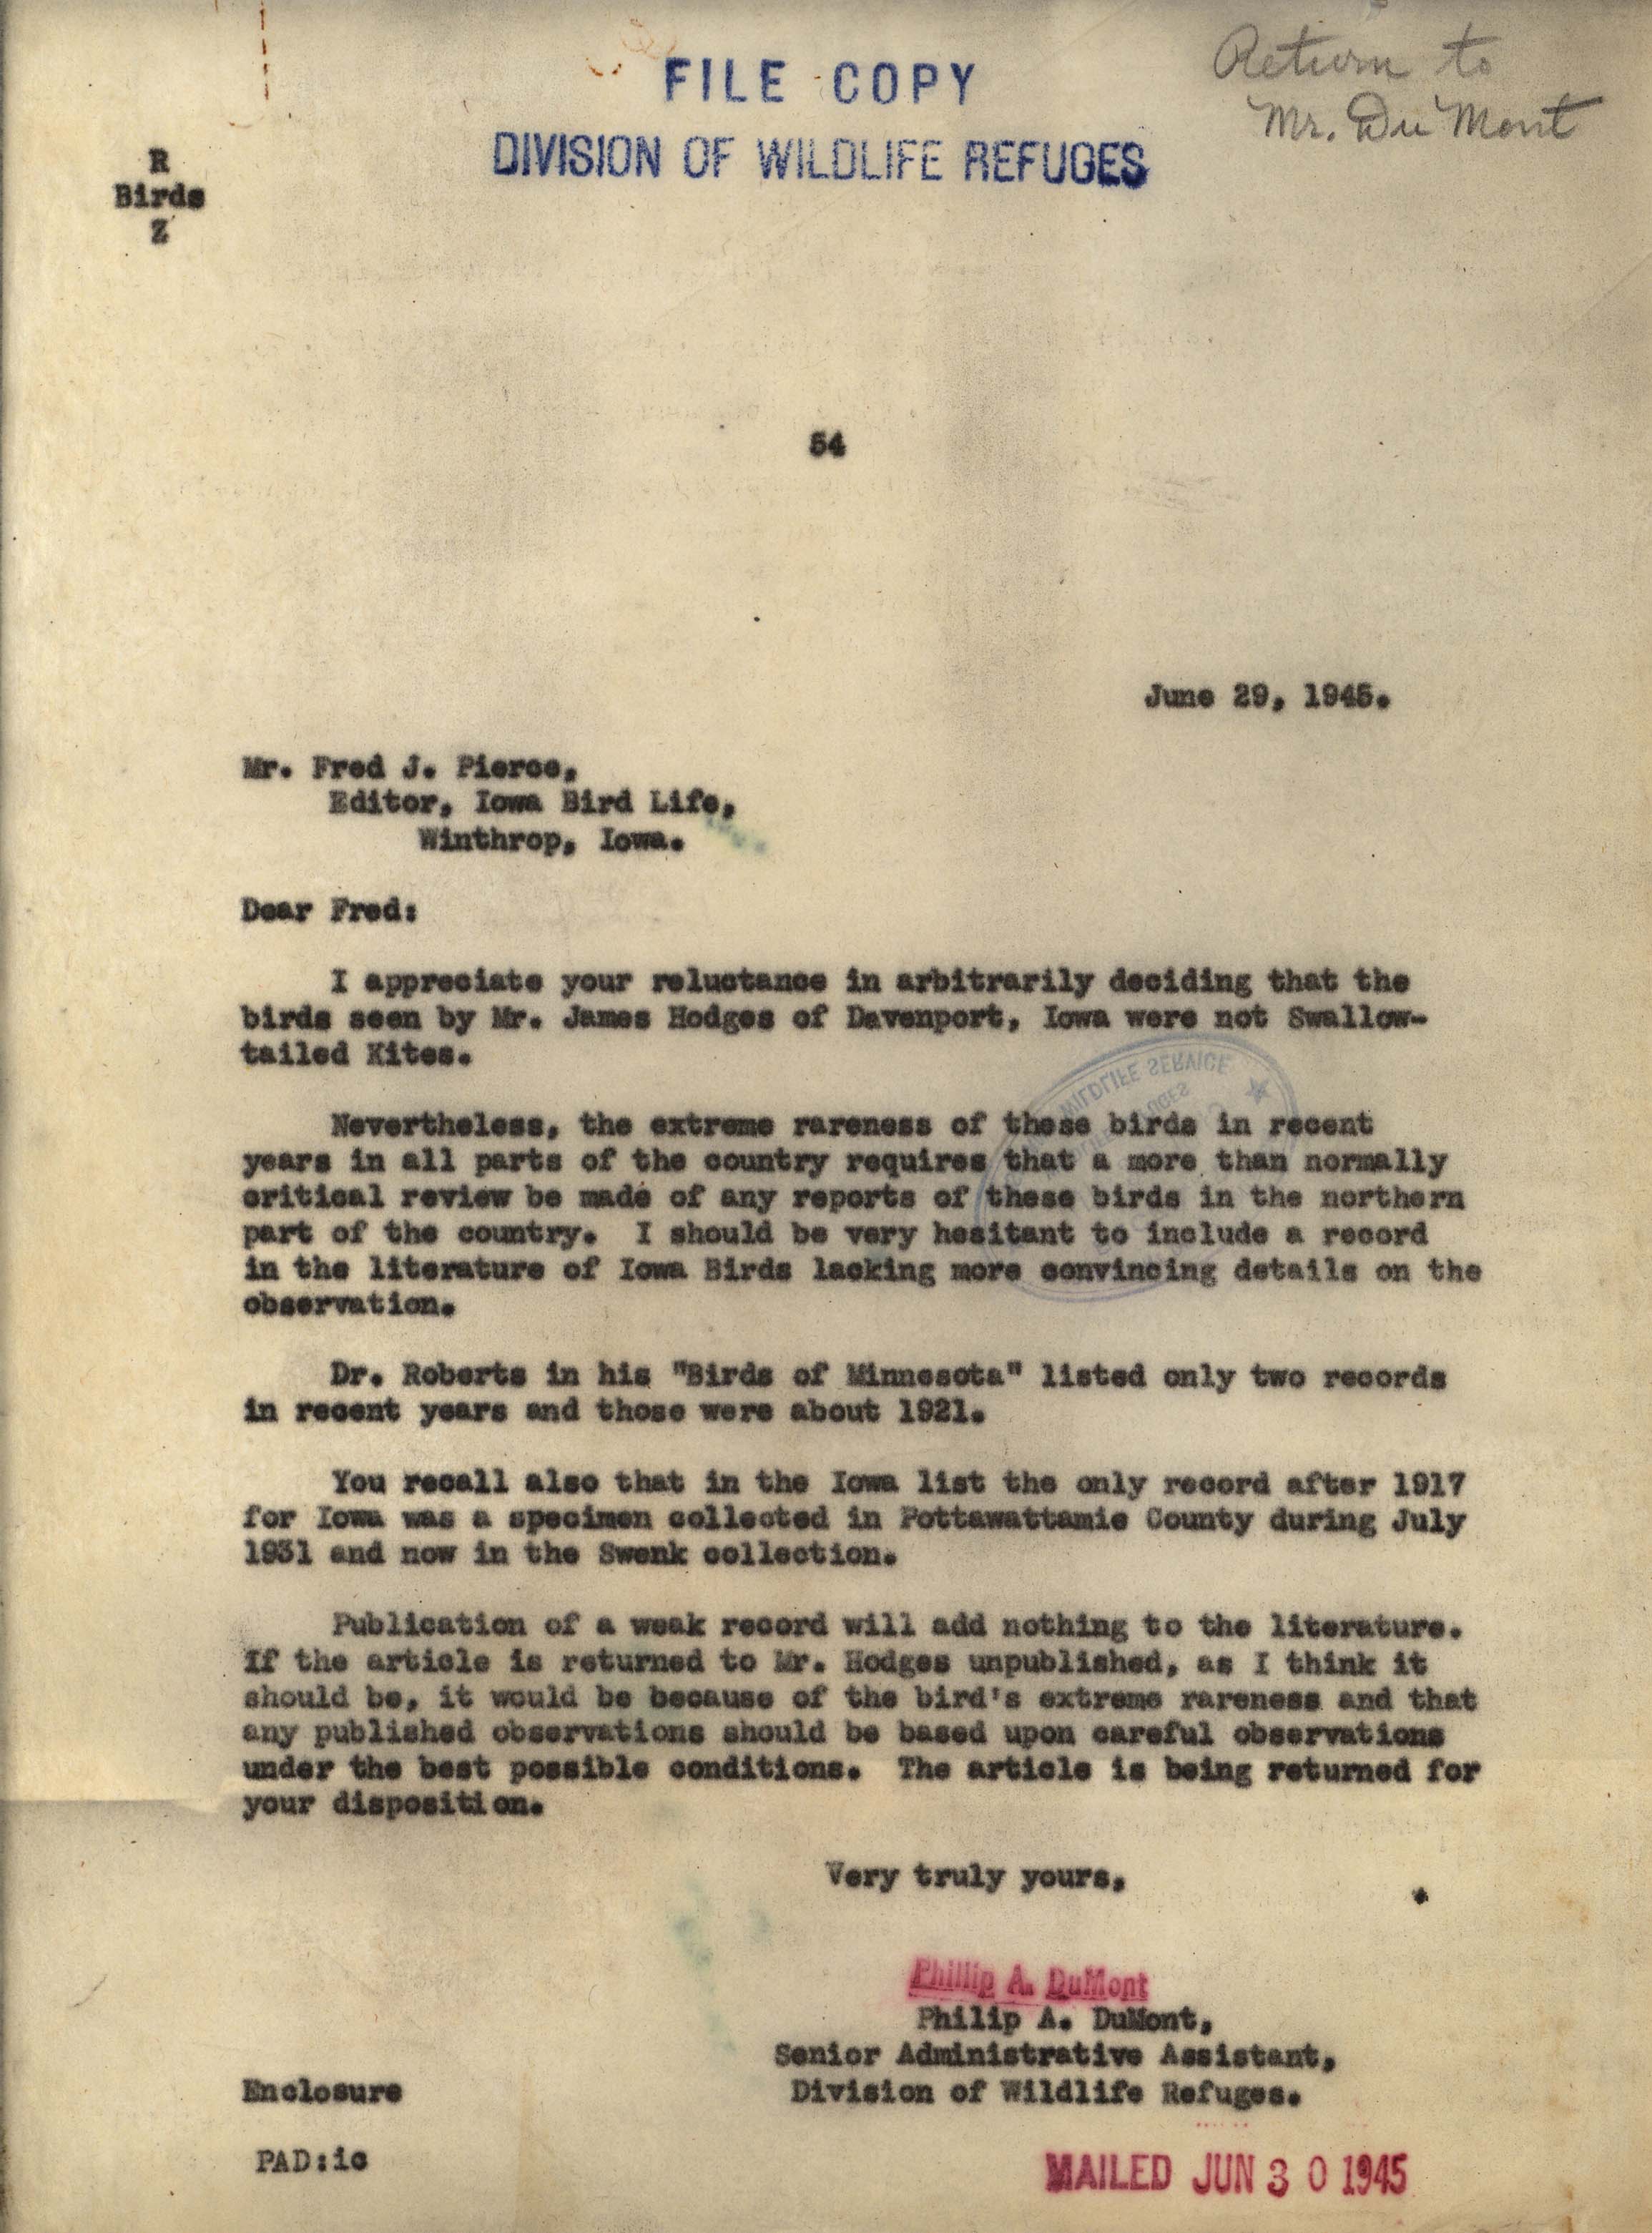 Philip DuMont letter to Fred Pierce regarding Swallow-tailed Kites, June 29, 1945